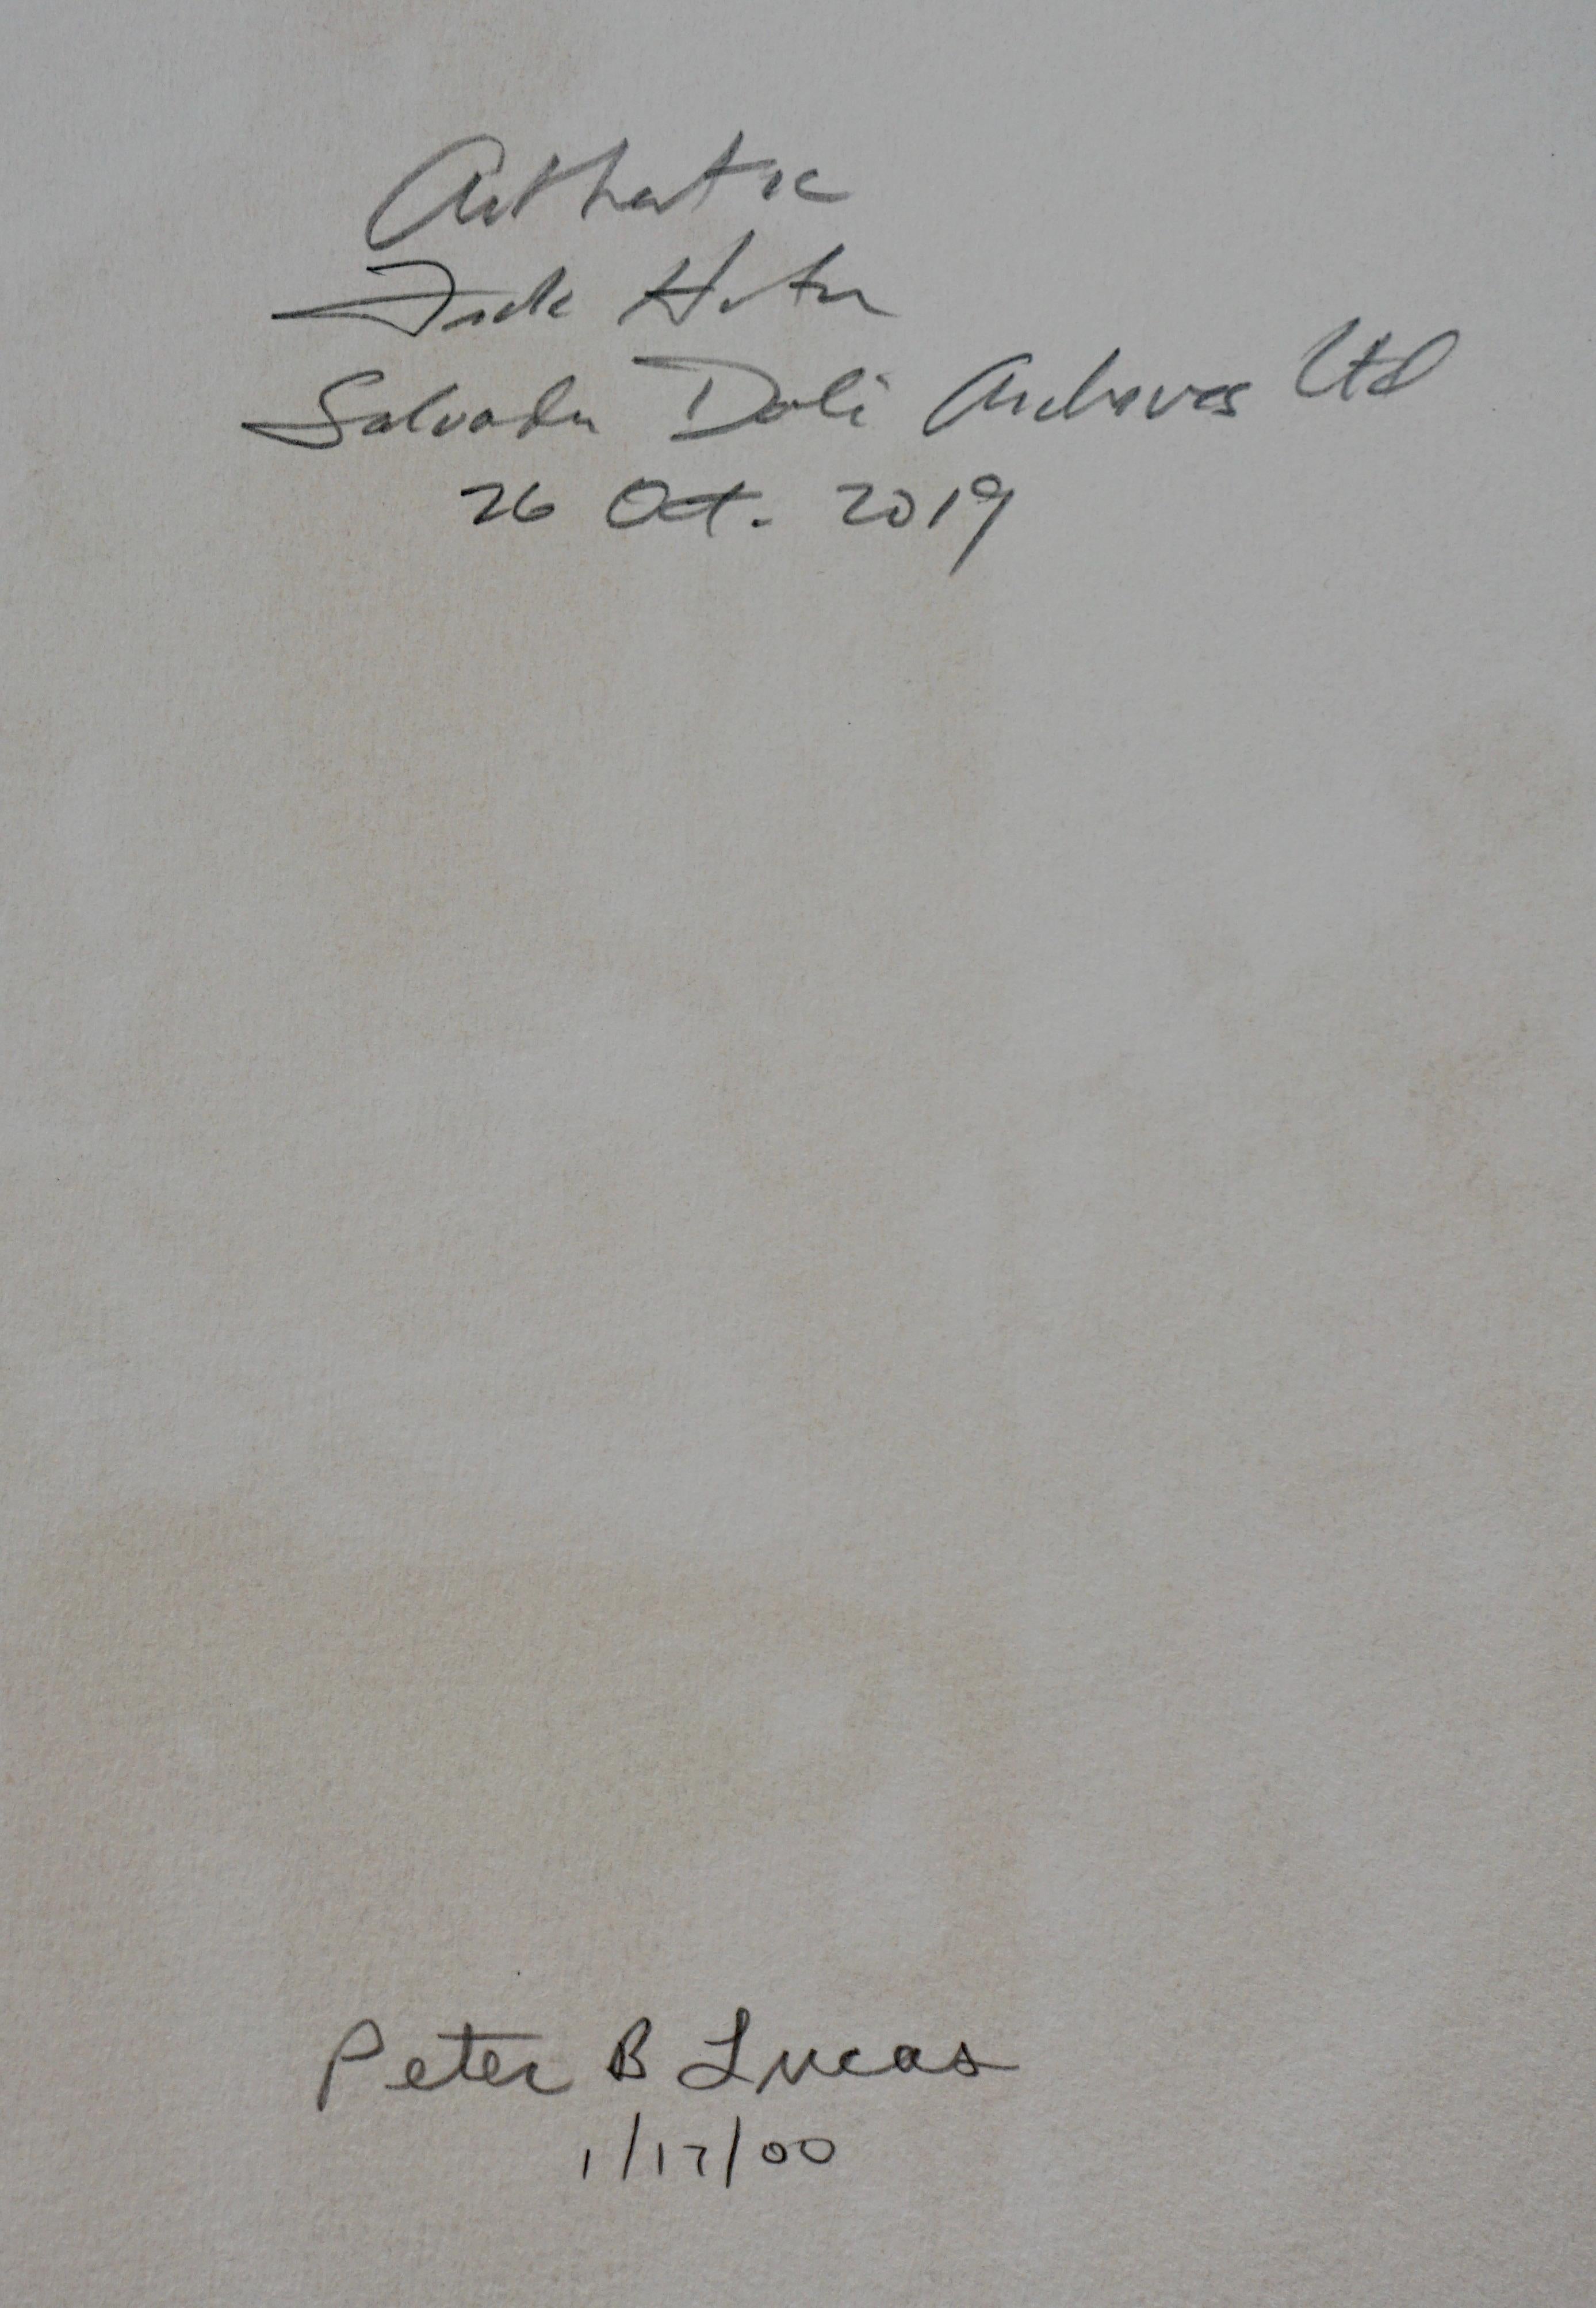 ARTIST: Salvador Dali

TITLE: The Bullfighter (Golden Calf)

MEDIUM: Lithograph

SIGNED: Hand Signed 

PUBLISHER: Levine & Levine 

EDITION NUMBER: XXV/CL

MEASUREMENTS: 29.25